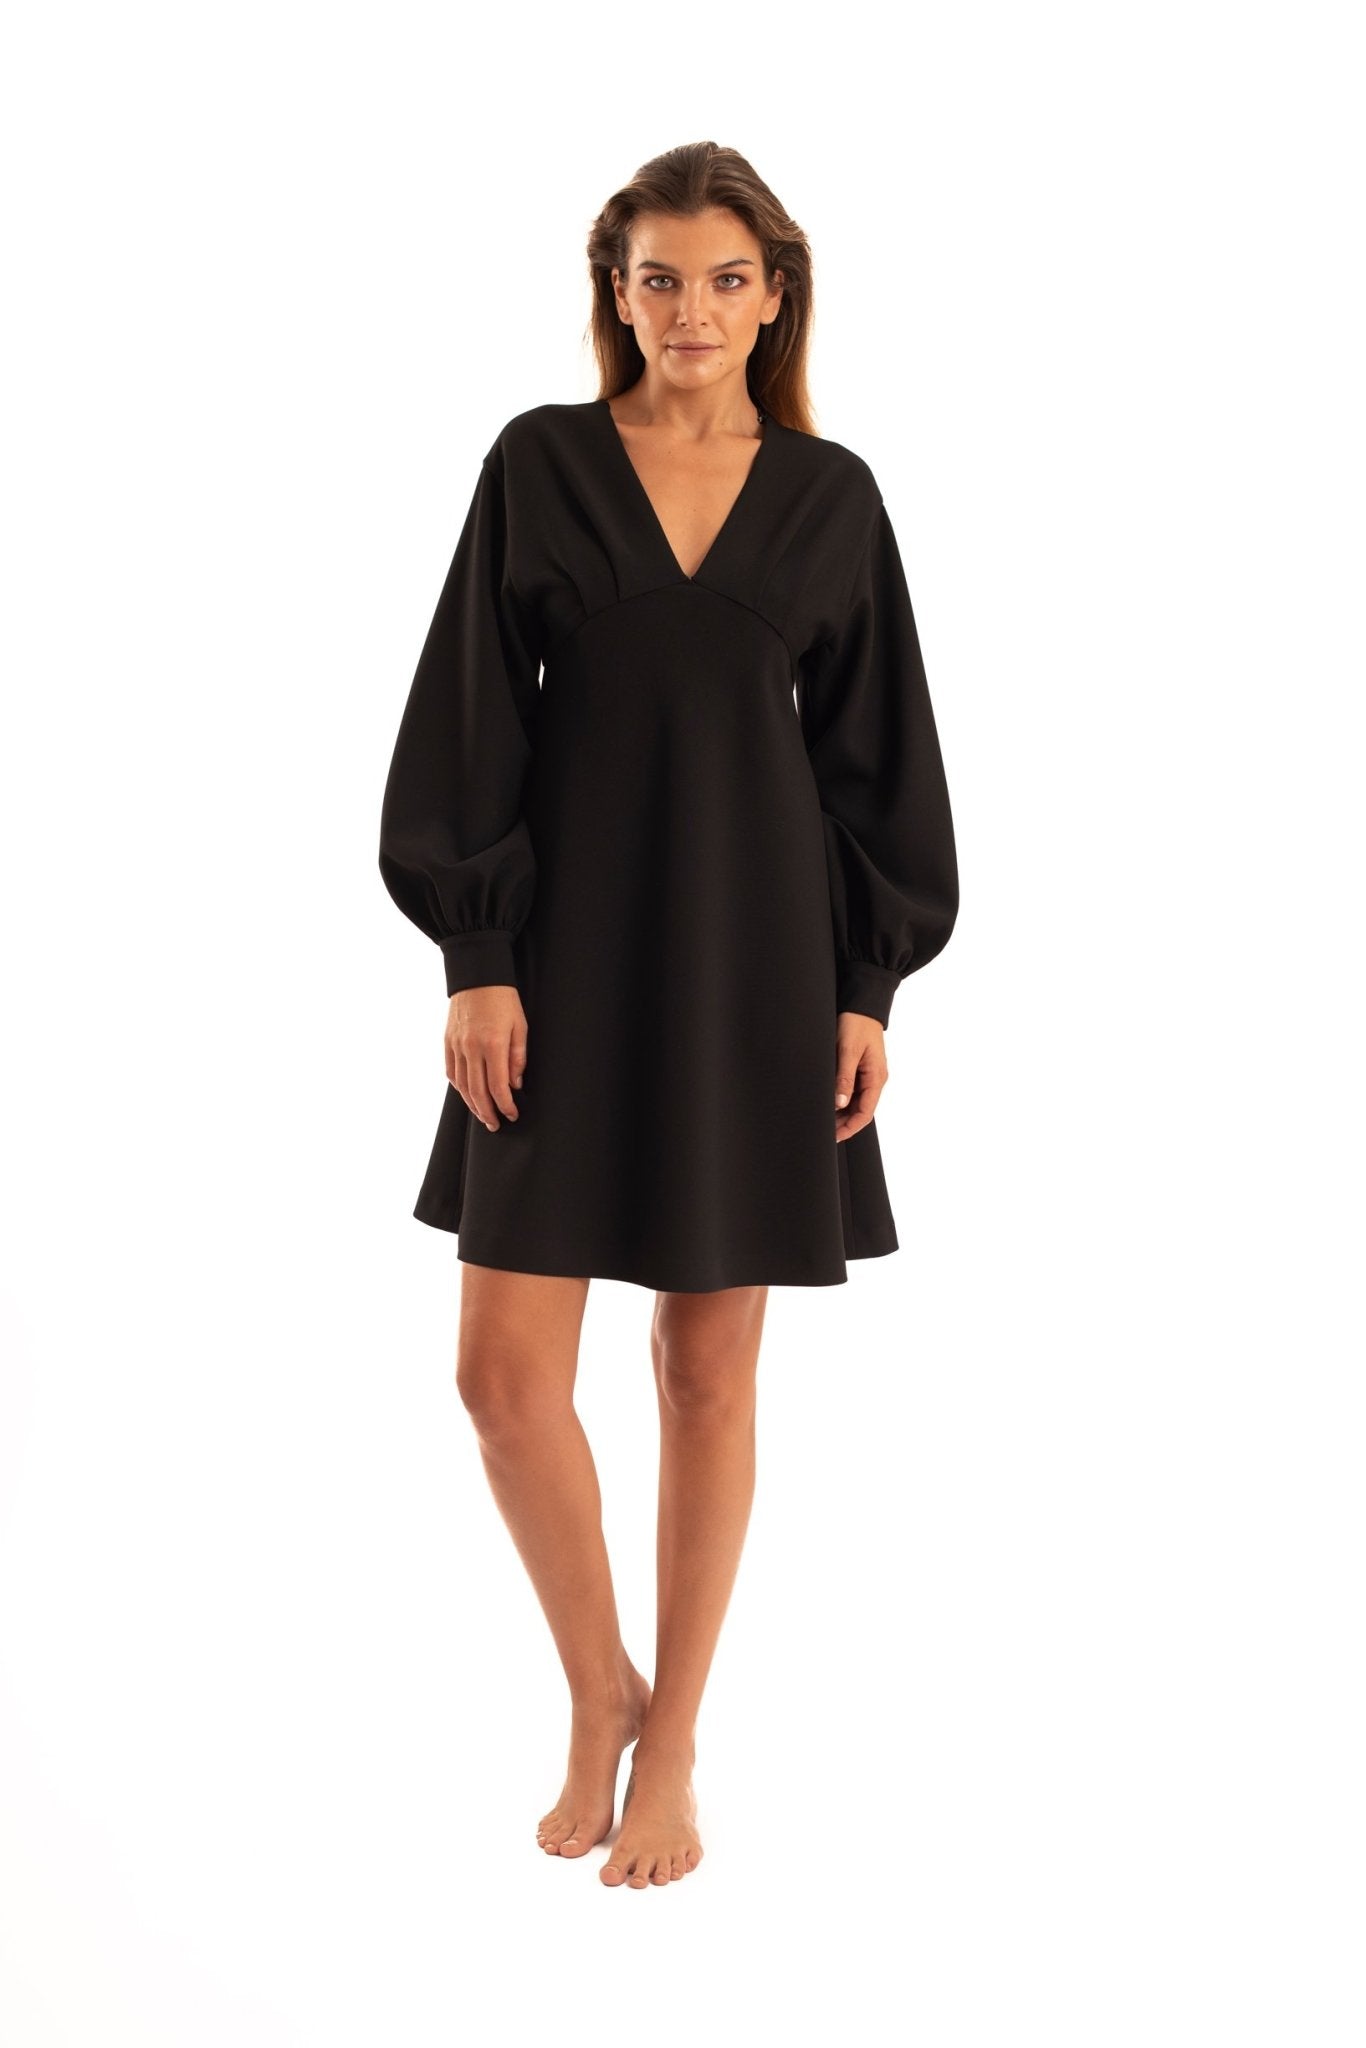 Black V-neck Dress - The Clothing LoungeNOPIN